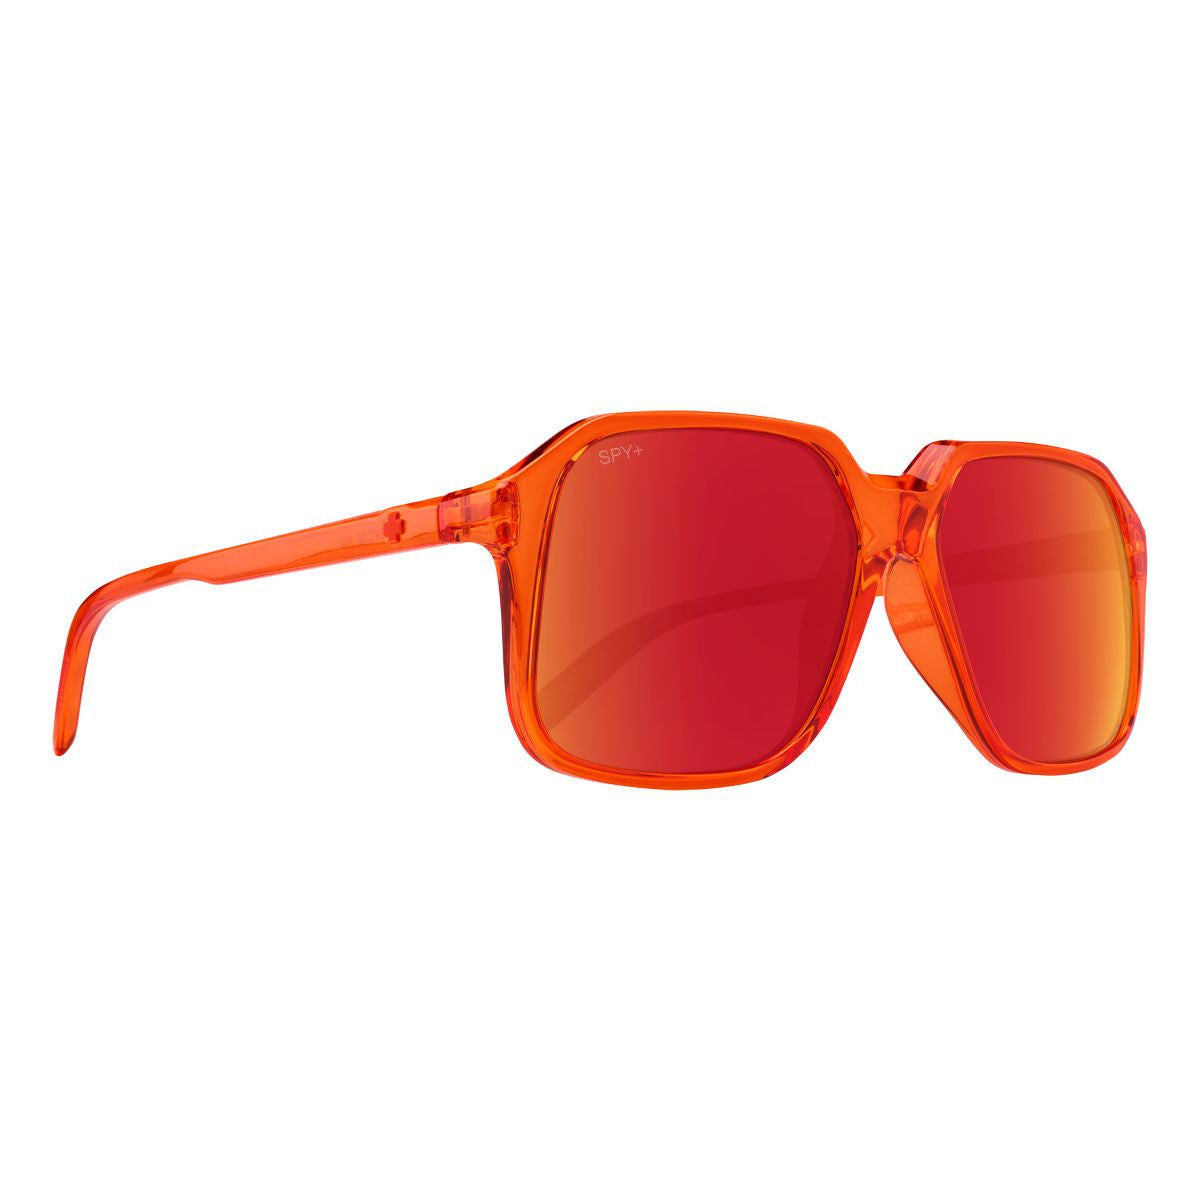 Spy Hotspot Sunglasses  Beyond Control Orange Medium-Large, Large-Extra Large M-L 54-61